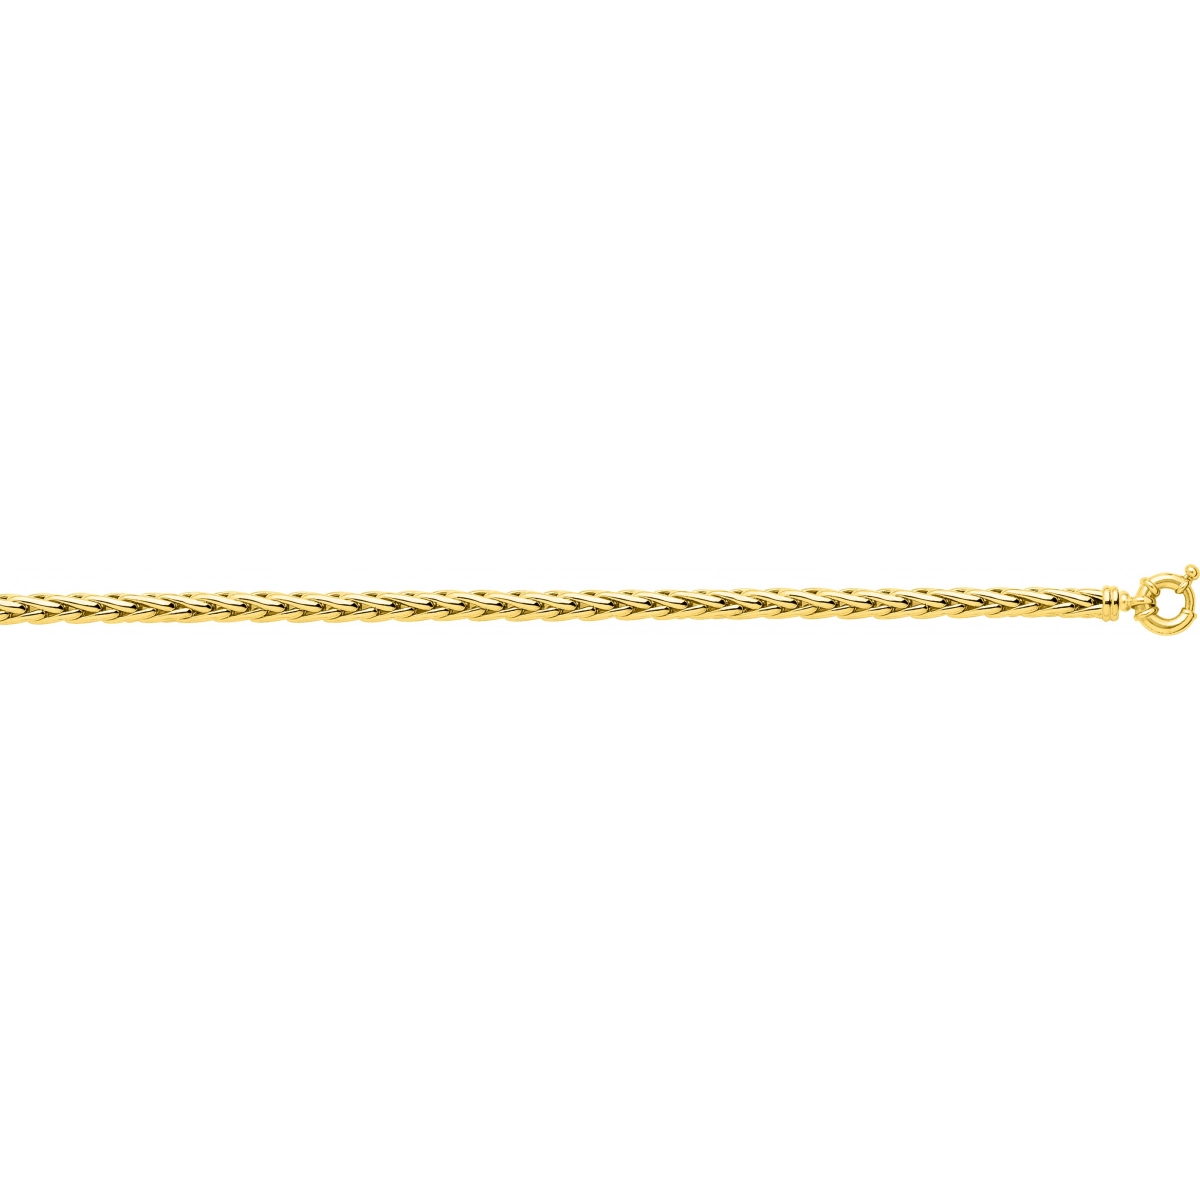 Bracelet 'palm chain' hollow 18K YG Lua Blanca  3549 - Size 18